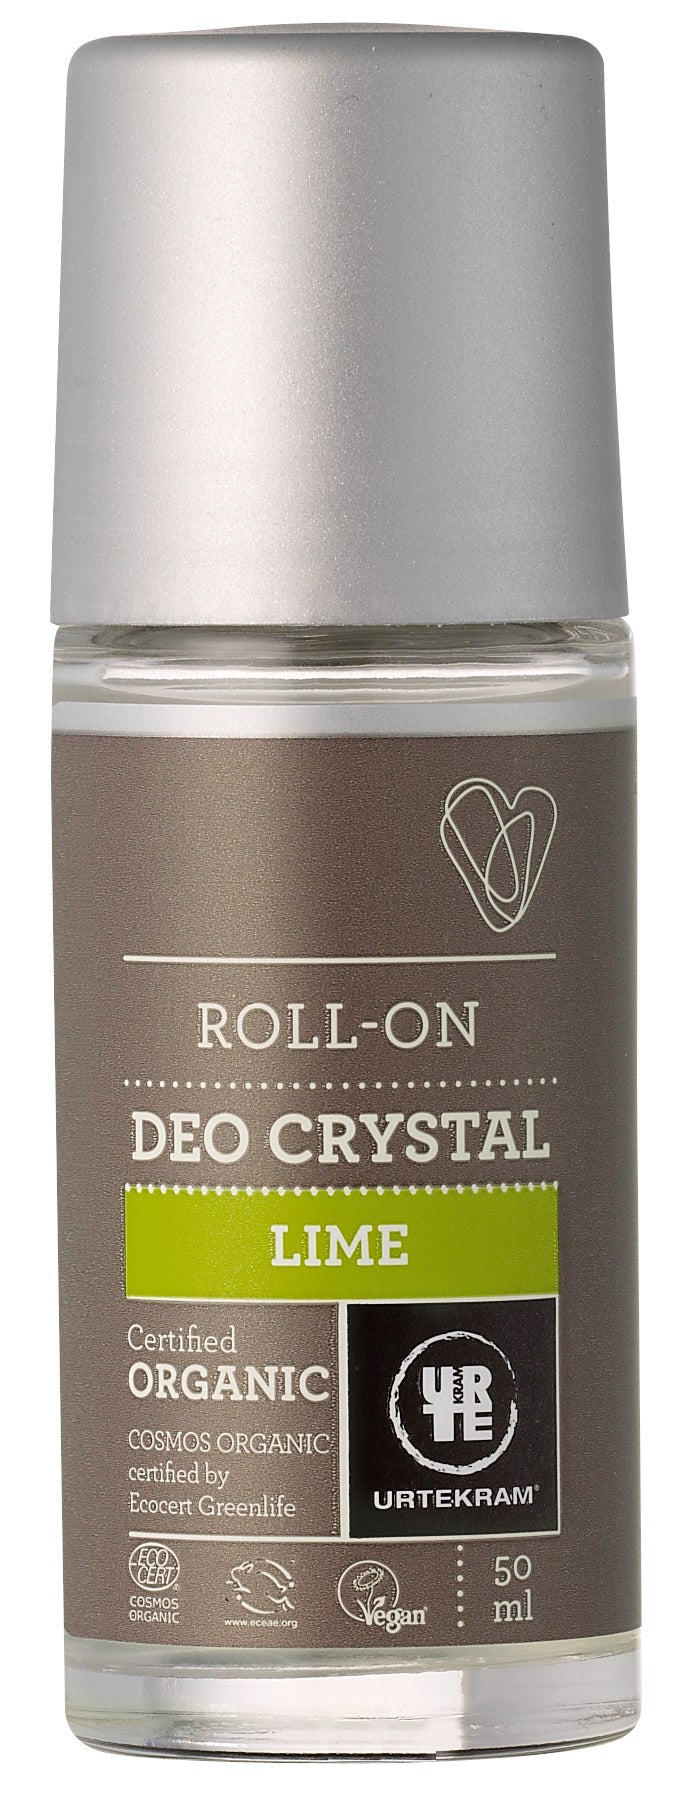 Urtekram Natural Deodorant - LIME CRYSTAL ROLL ON - Preservative & Aluminium Chlorhydrate FREE, 50 ml